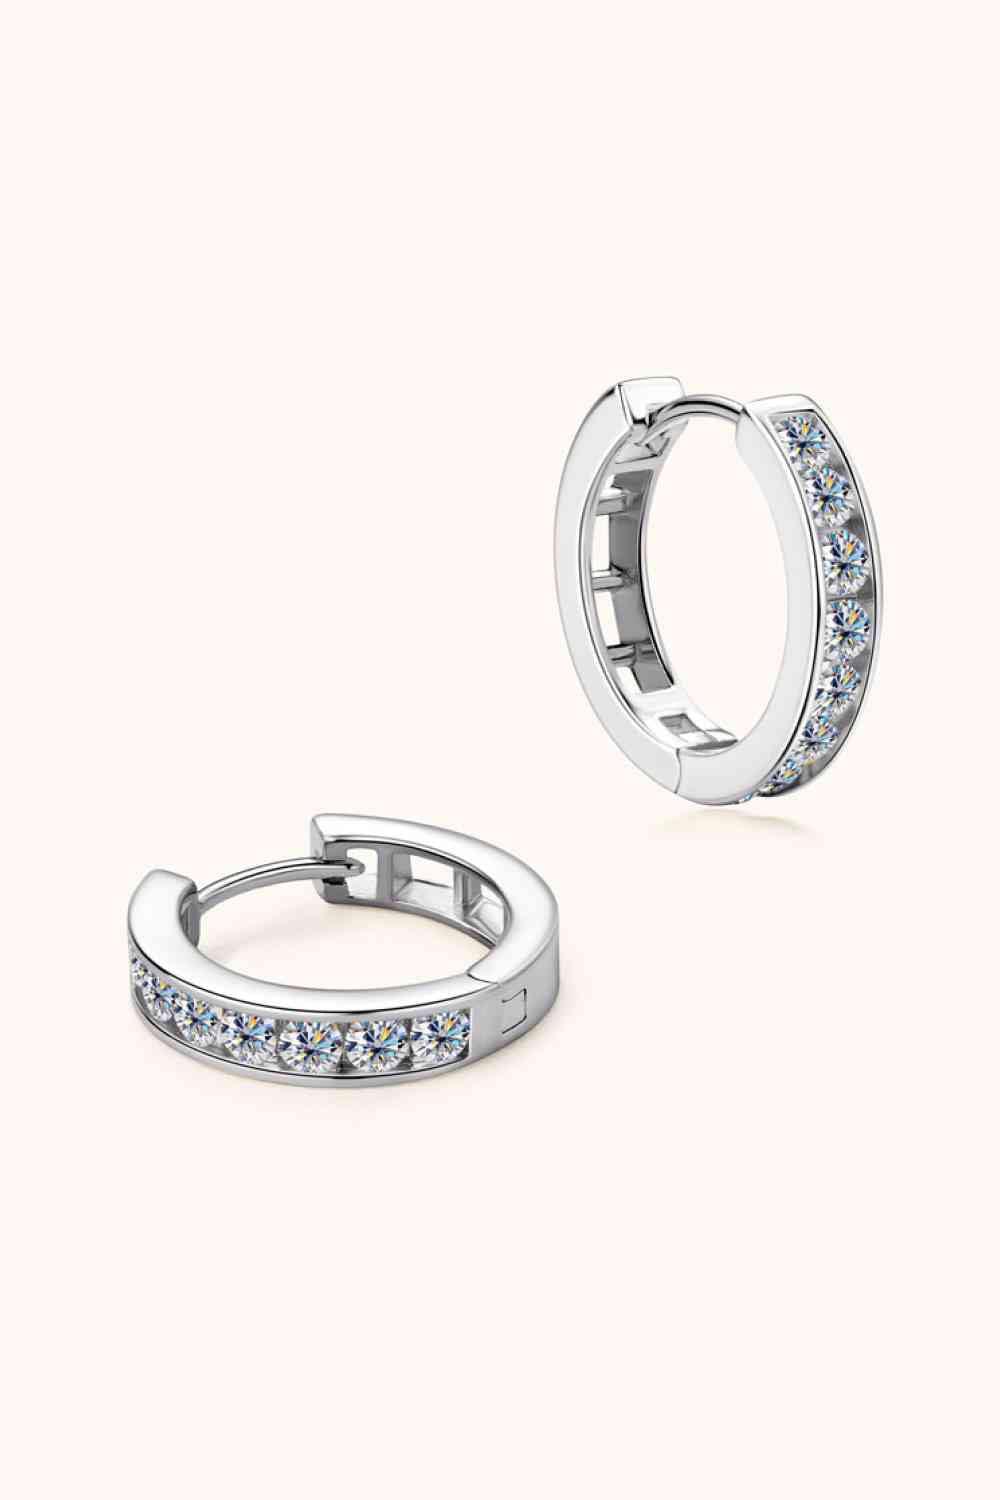 Moissanite 925 Sterling Silver Huggie Earrings - God's Girl Gifts And Apparel